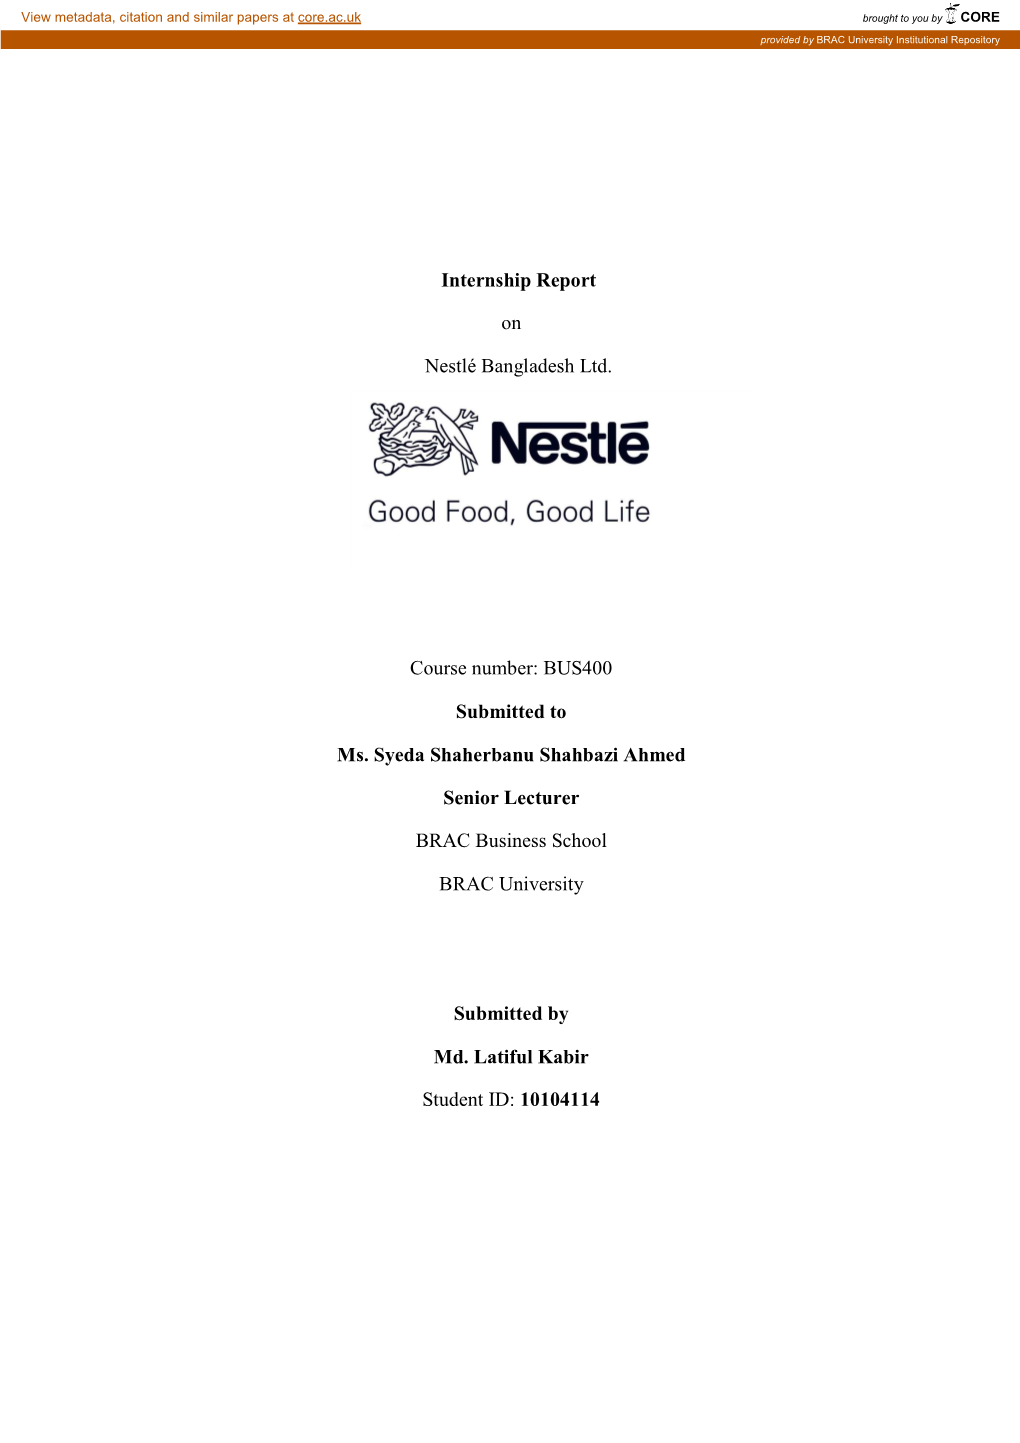 Internship Report on Nestlé Bangladesh Ltd. Course Number